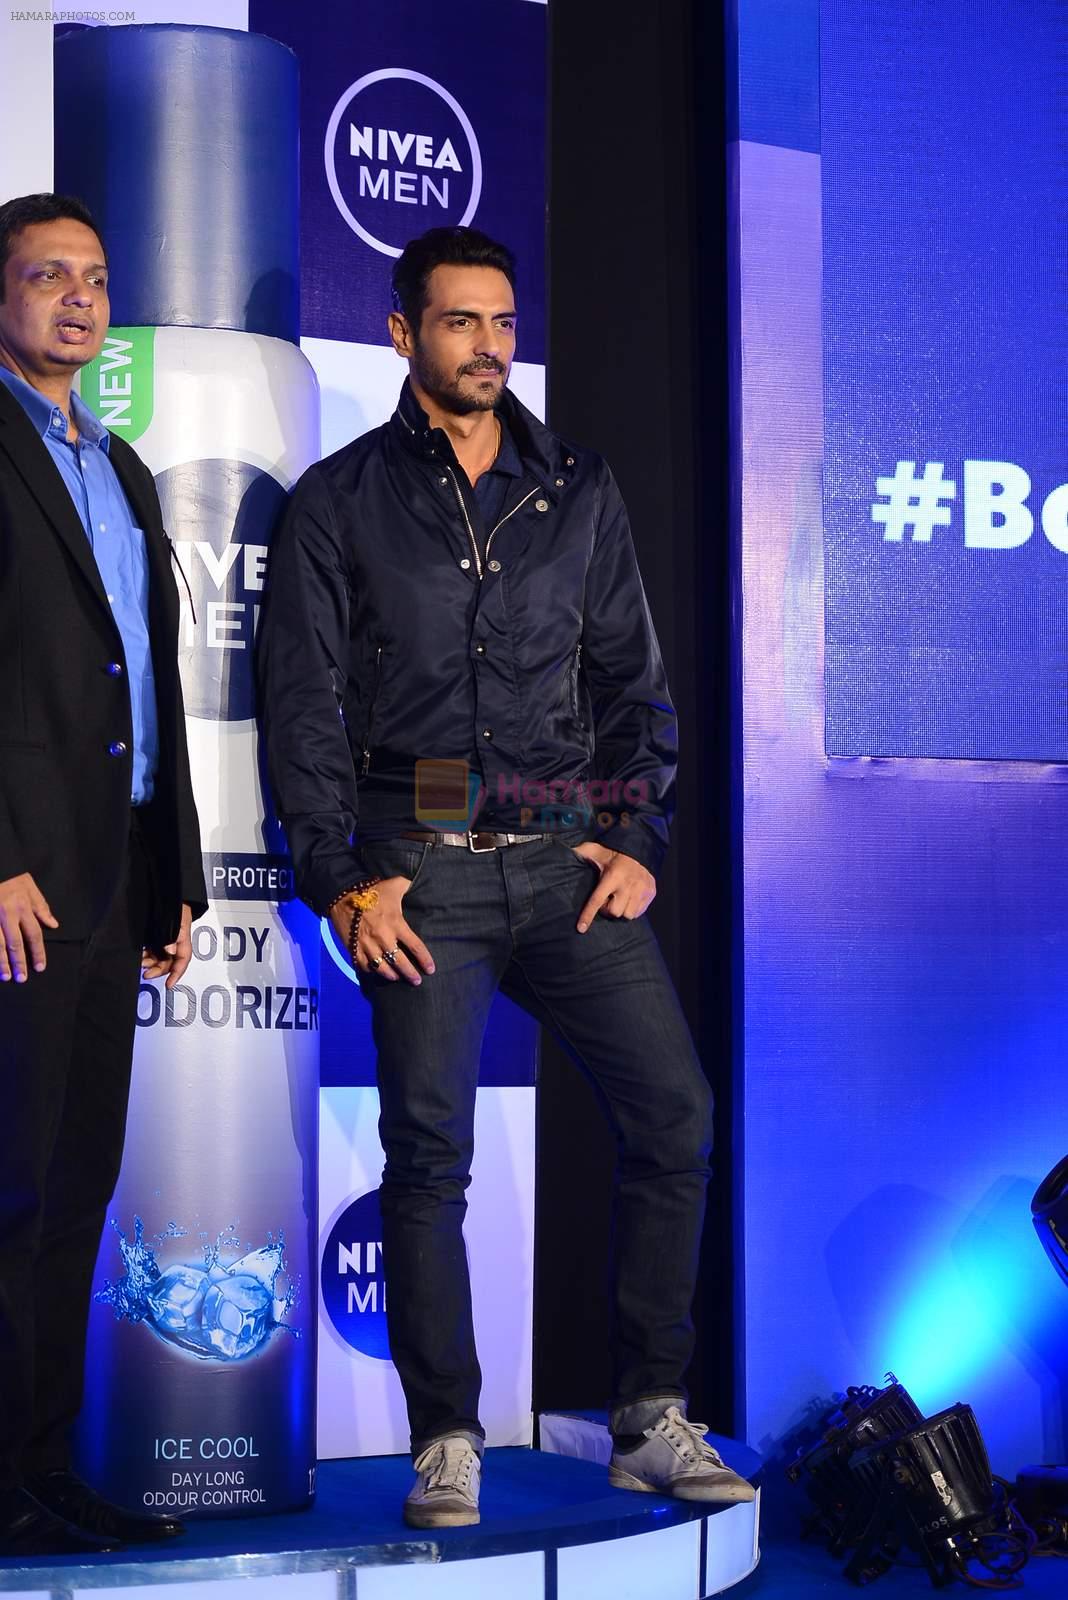 Arjun Rampal at Nivea Men Body Deodizer launch on 13th June 2015